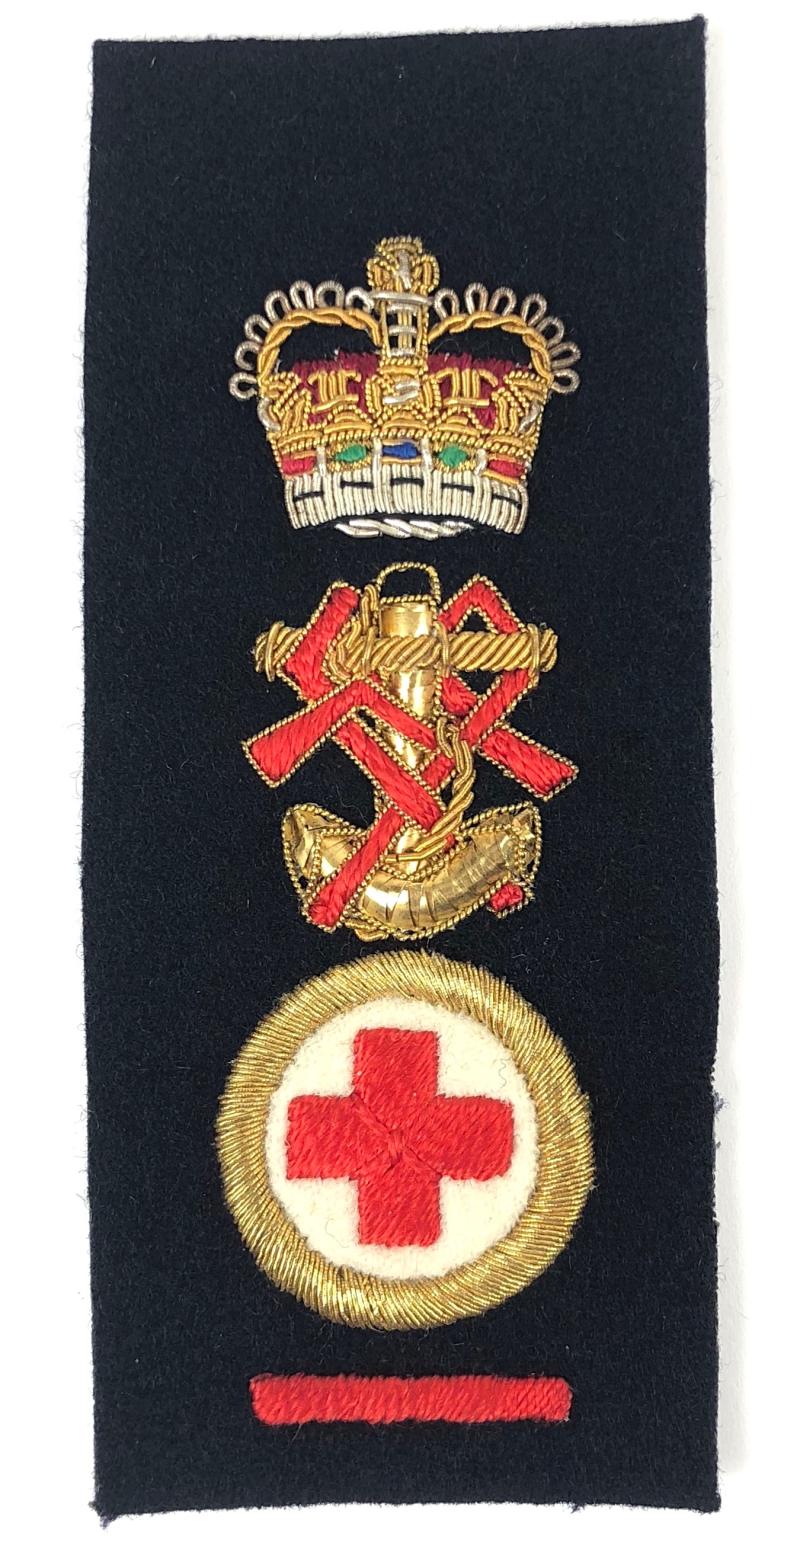 QARNNS Nursing Principal Matron rank badge